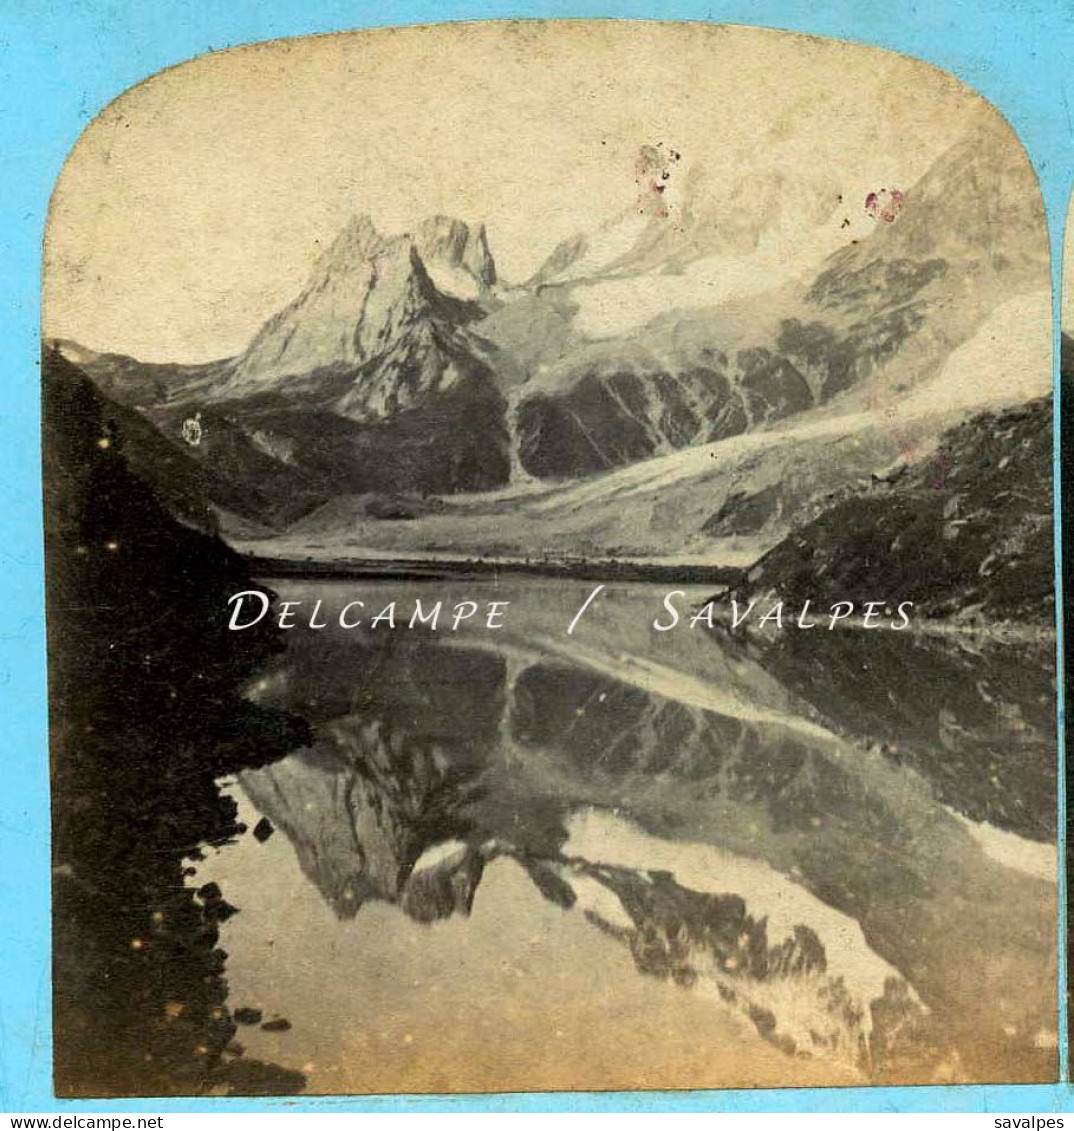 Italie Courmayeur * Lac Comballes Allée Blanche* Photo Stéréoscopique Braun Vers 1865 - Photos Stéréoscopiques